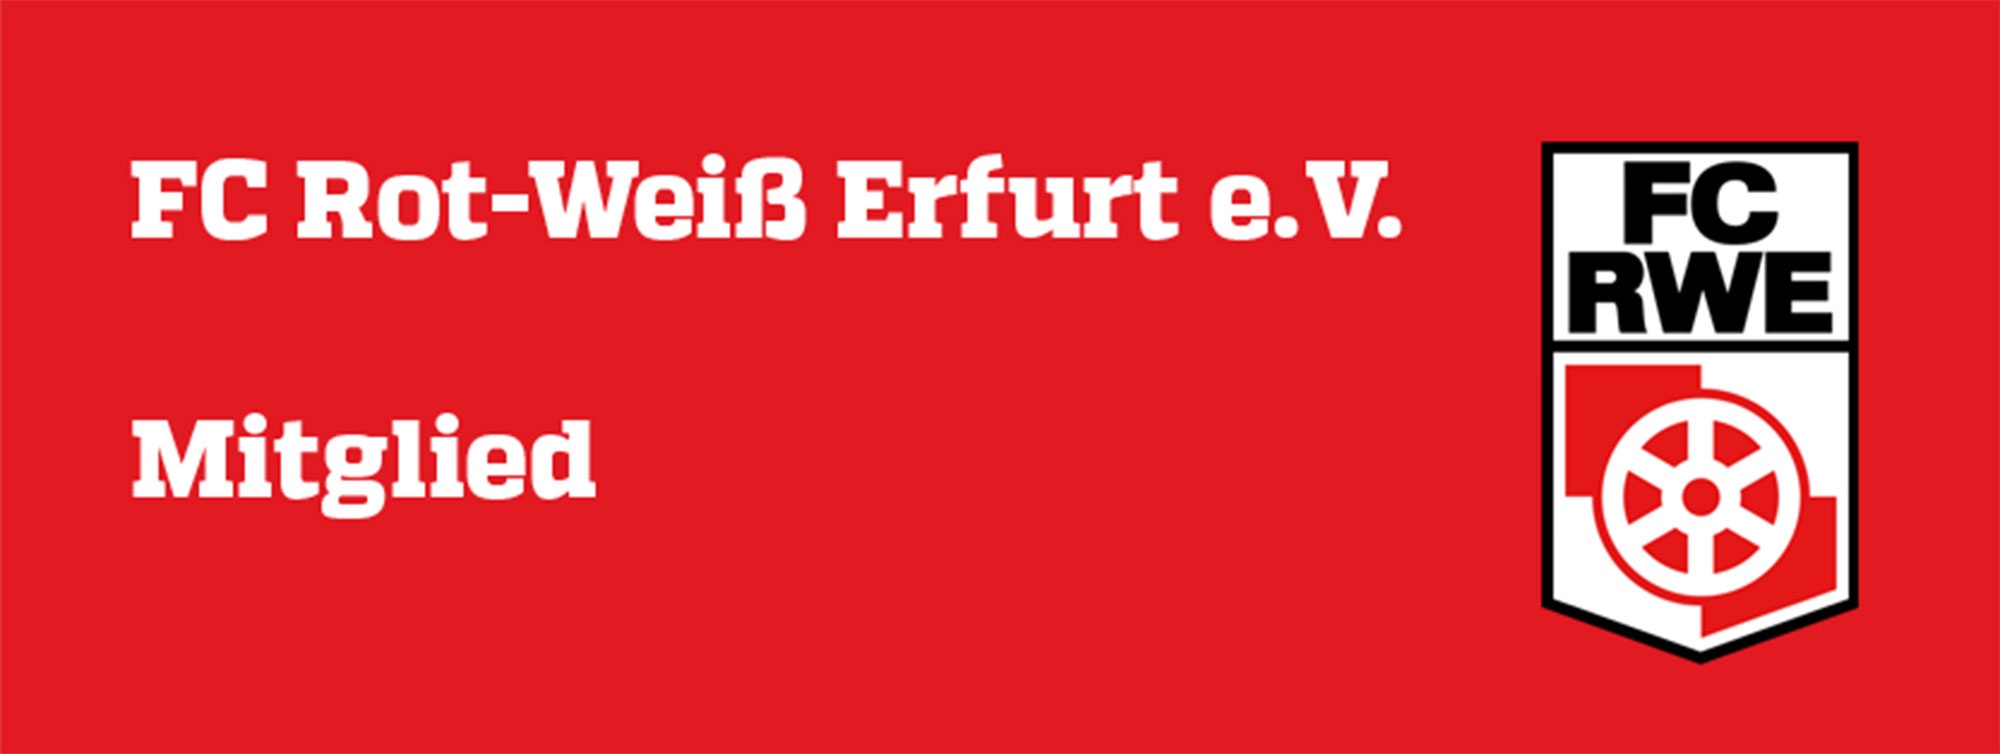 Mitgliederausweis-FC-RWE-eV_Stand-2021_Entwurf-1.jpg